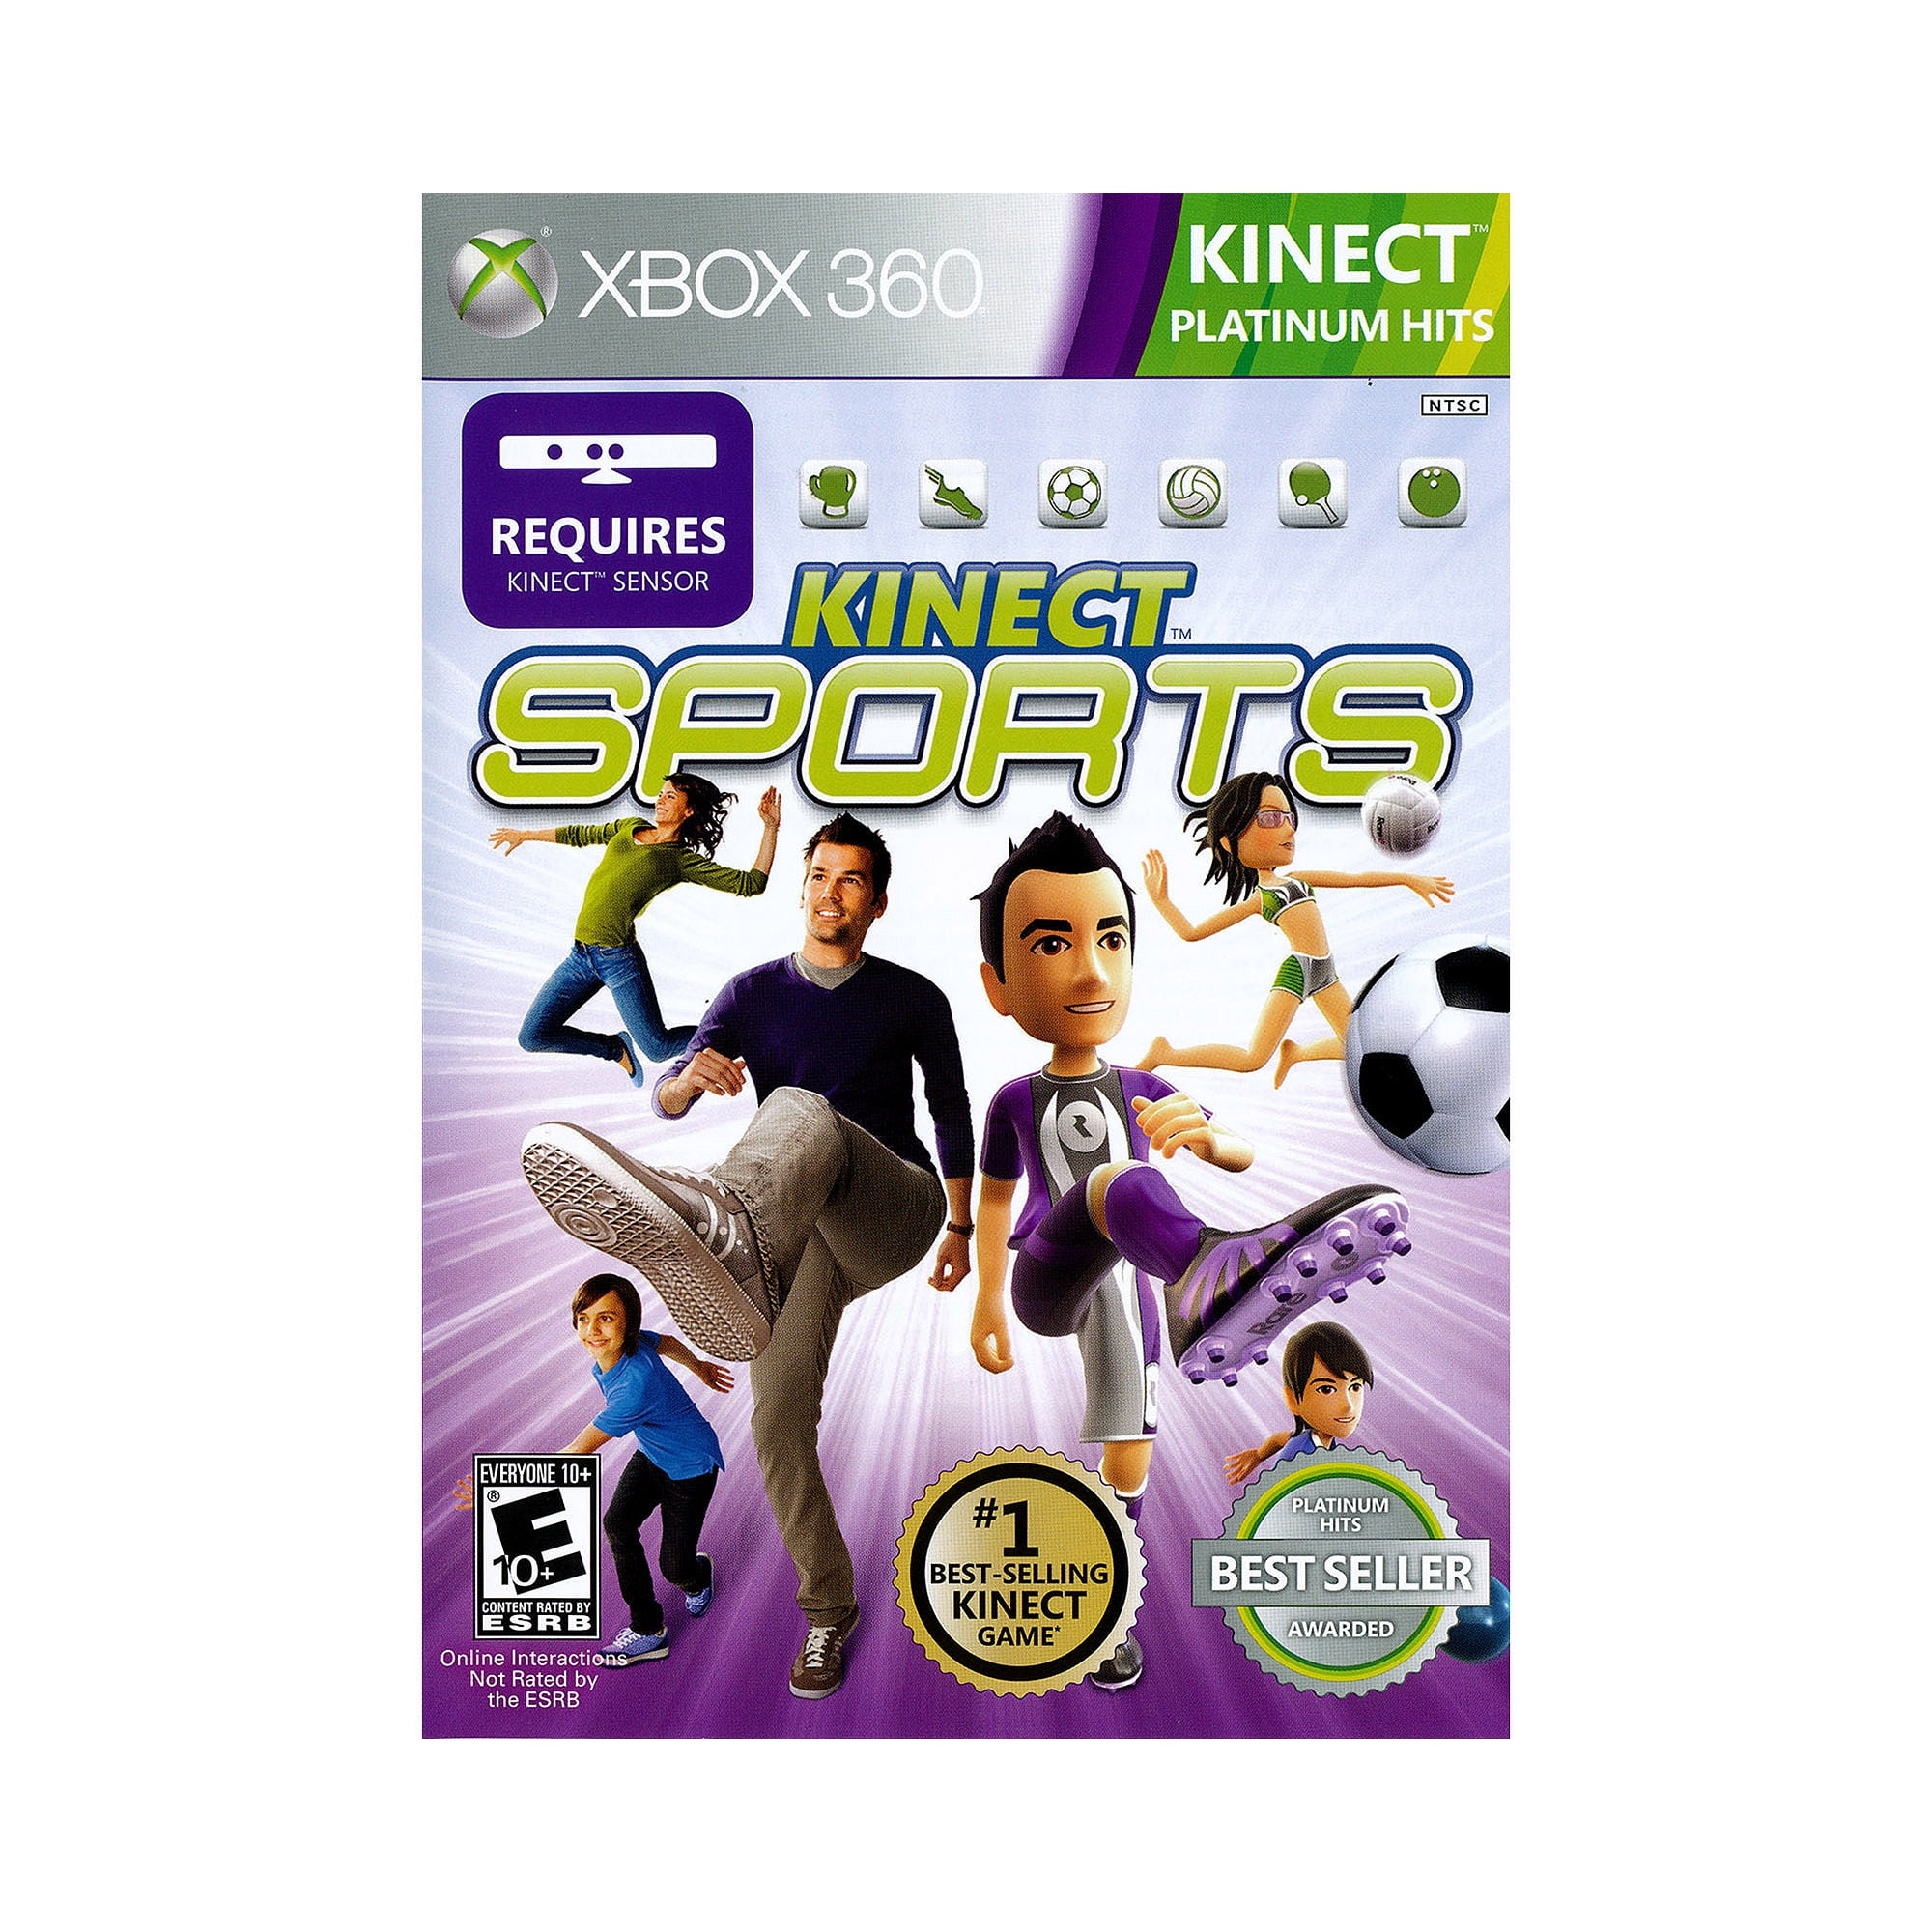 Microsoft Kinect Sports (Xbox 360/Kinect)